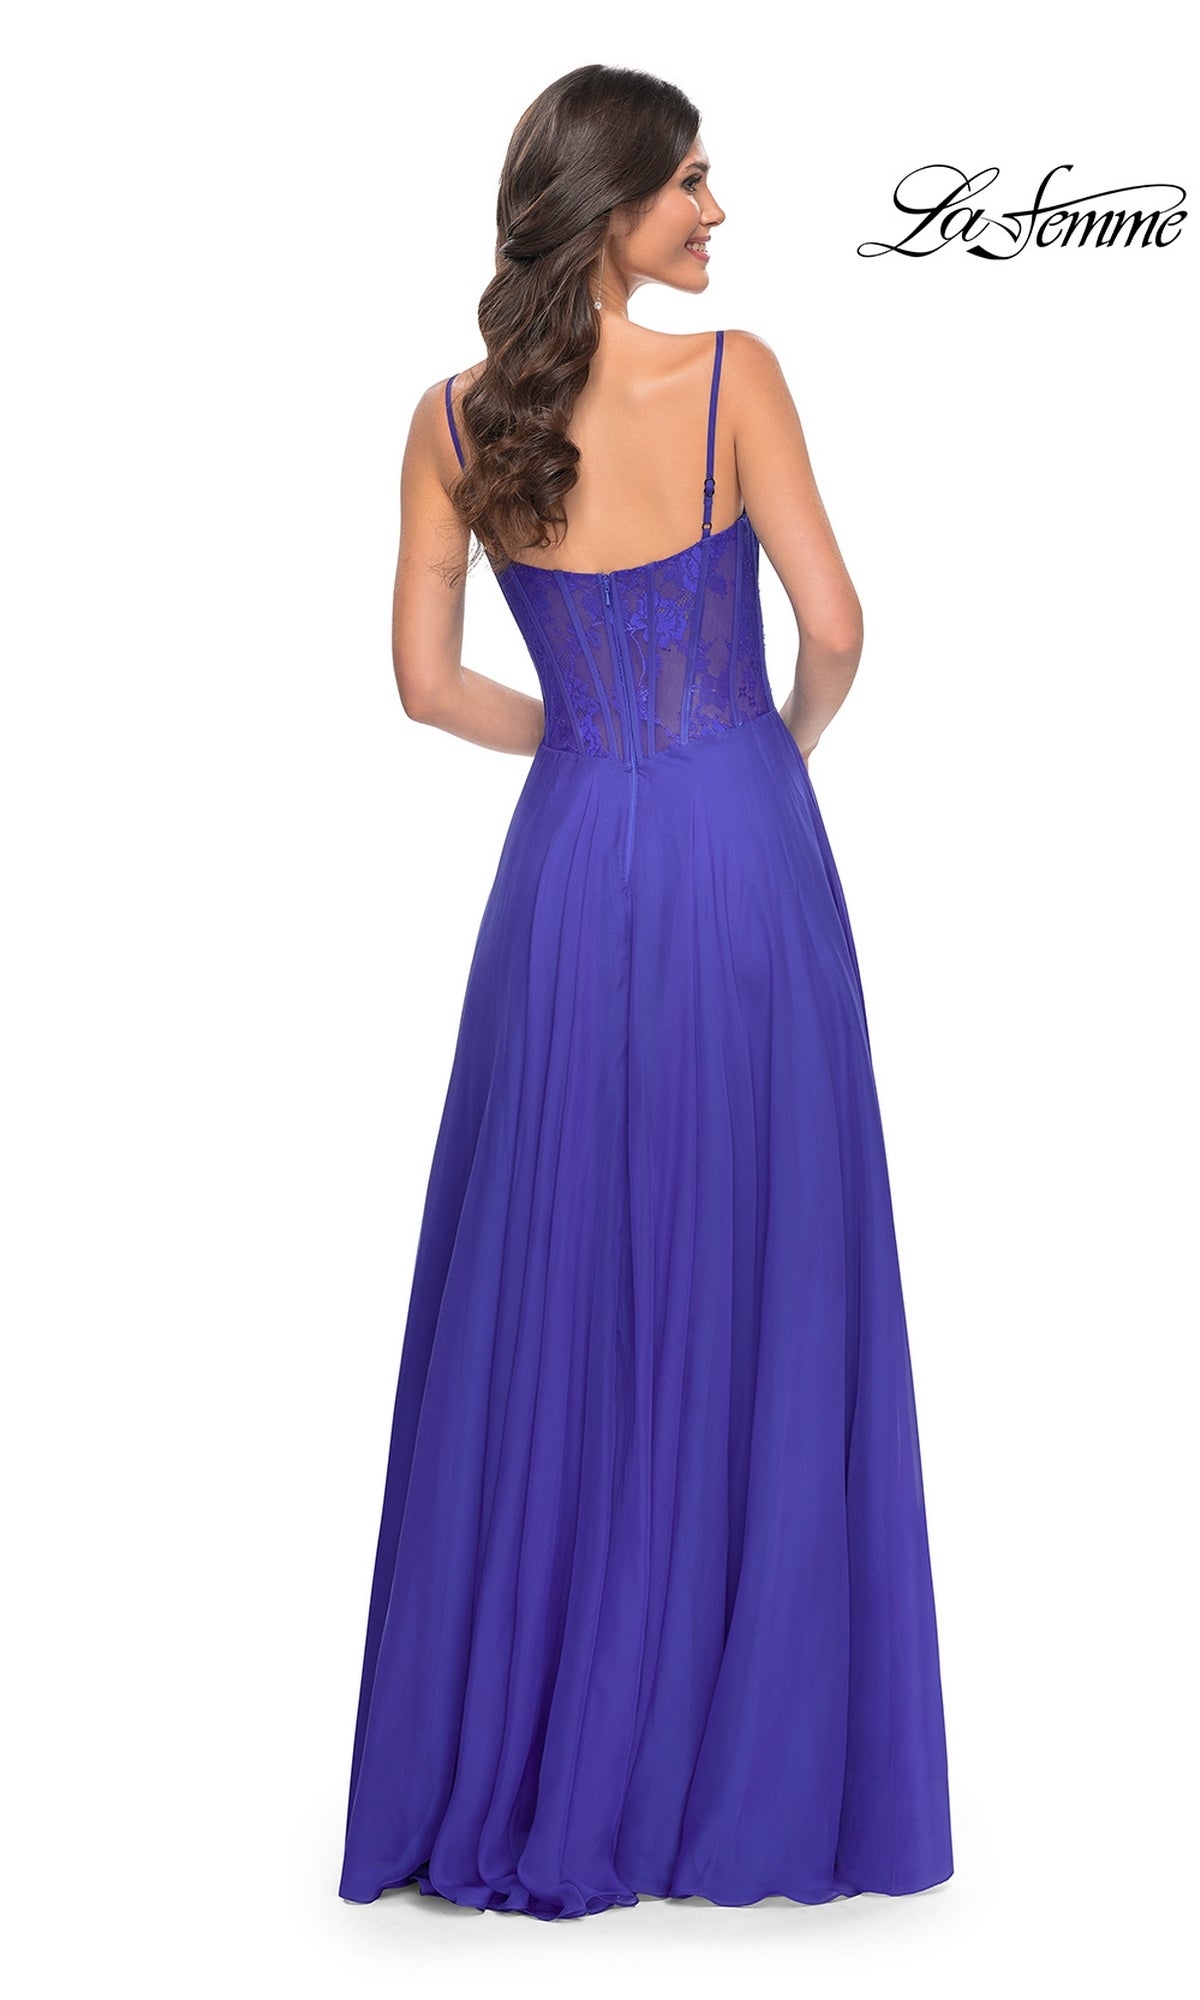  La Femme 32276 Formal Prom Dress